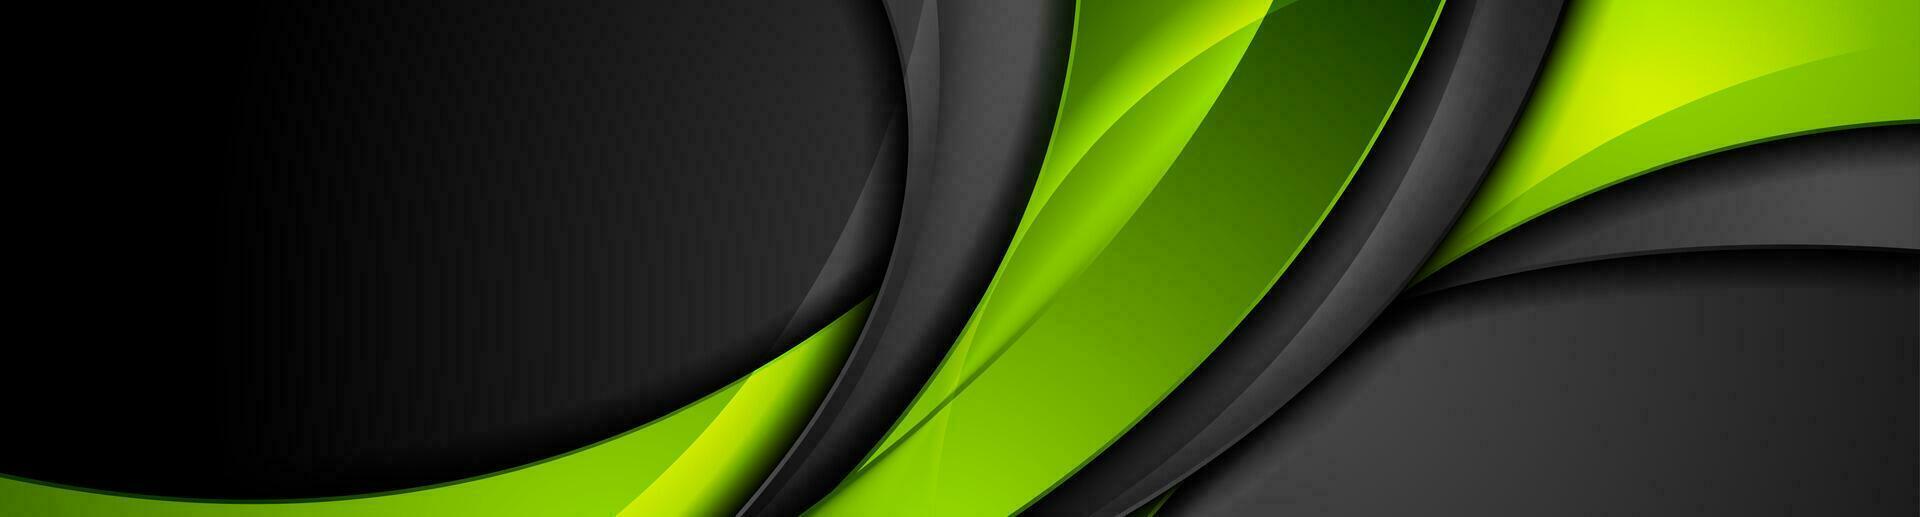 hoch Kontrast Grün schwarz abstrakt Technik korporativ Banner Design vektor